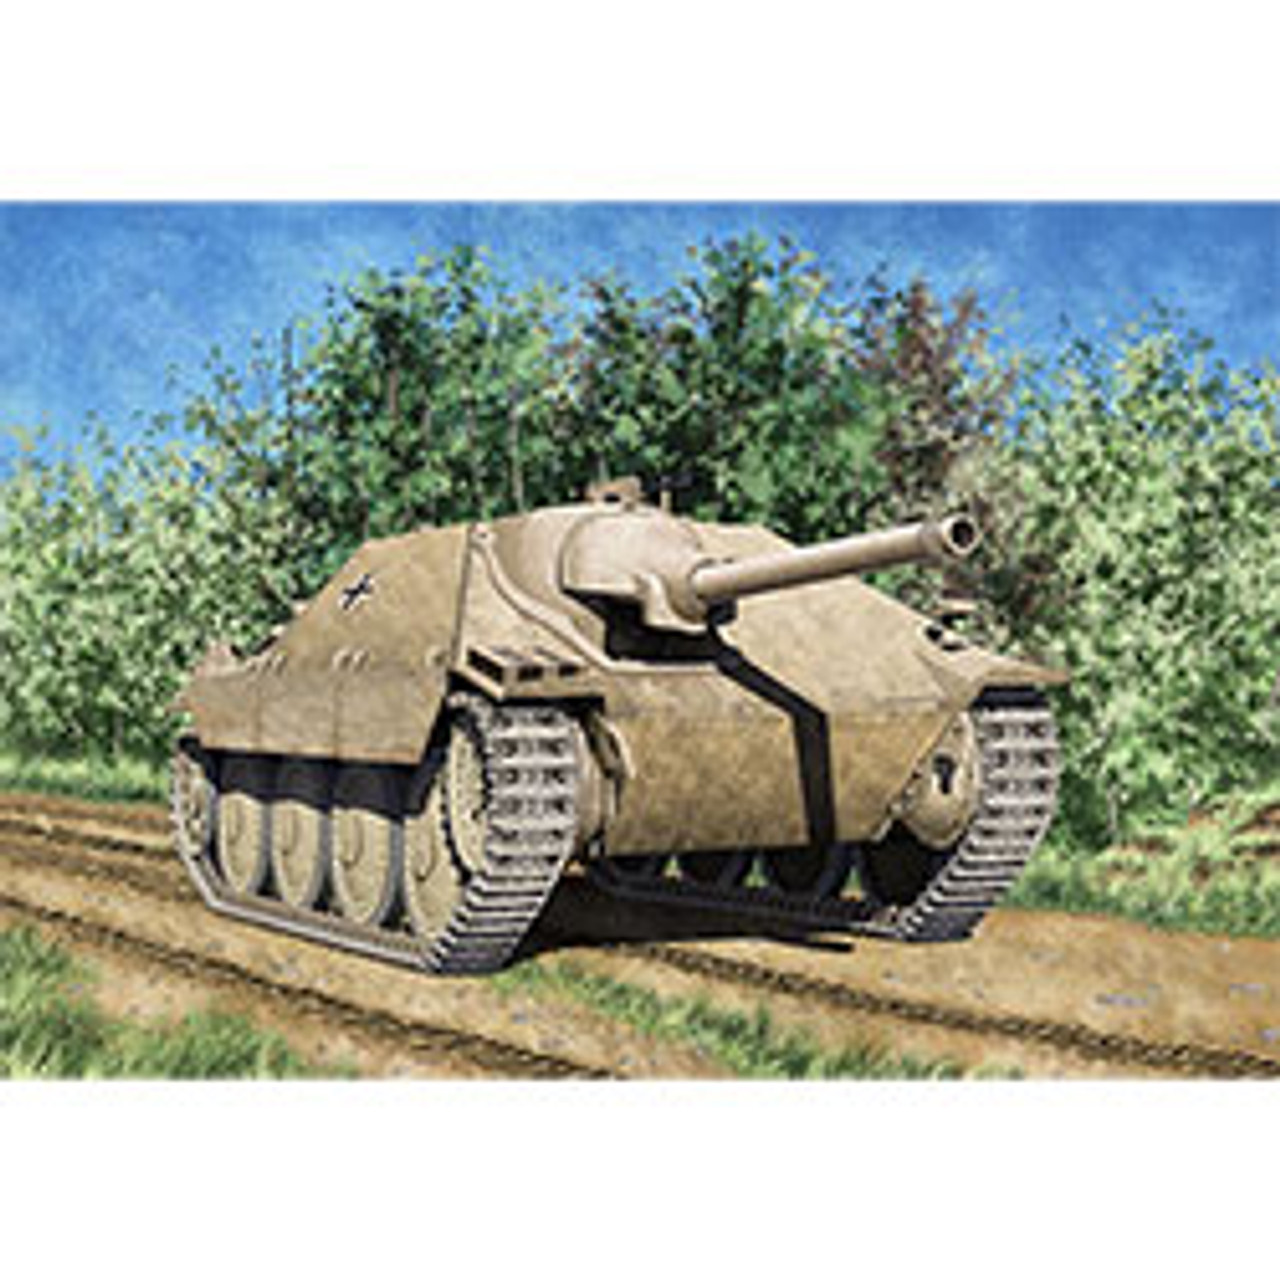 Academy 13278 1/35 Jagdpanzer 38(t) Hetzer "Early Version" Plastic Model Kit